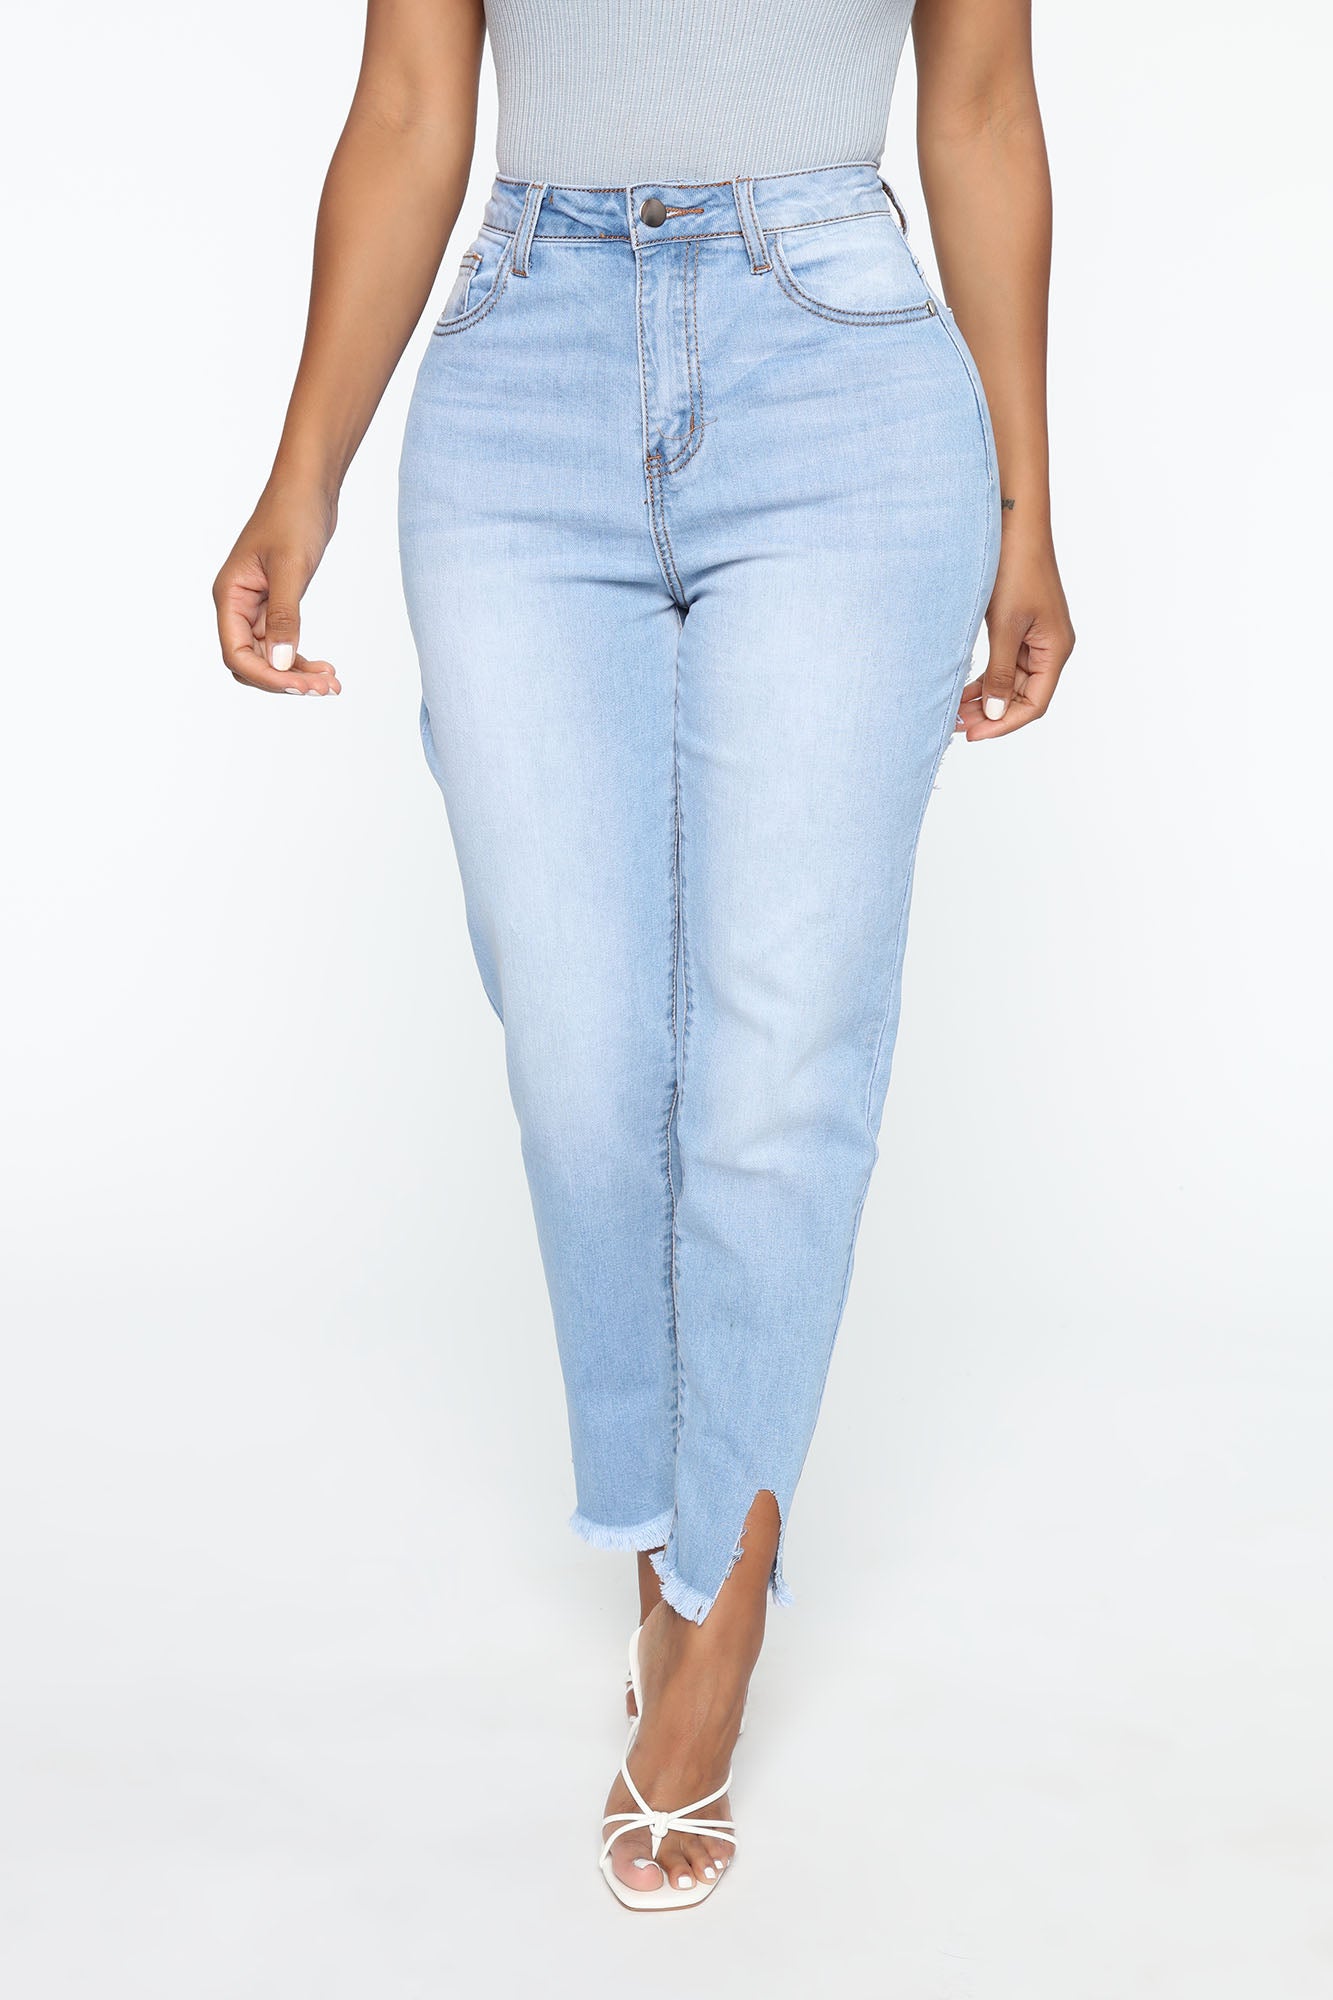 Let's Have Some Fun Cut Out Jeans - Light Blue Wash | Fashion Nova